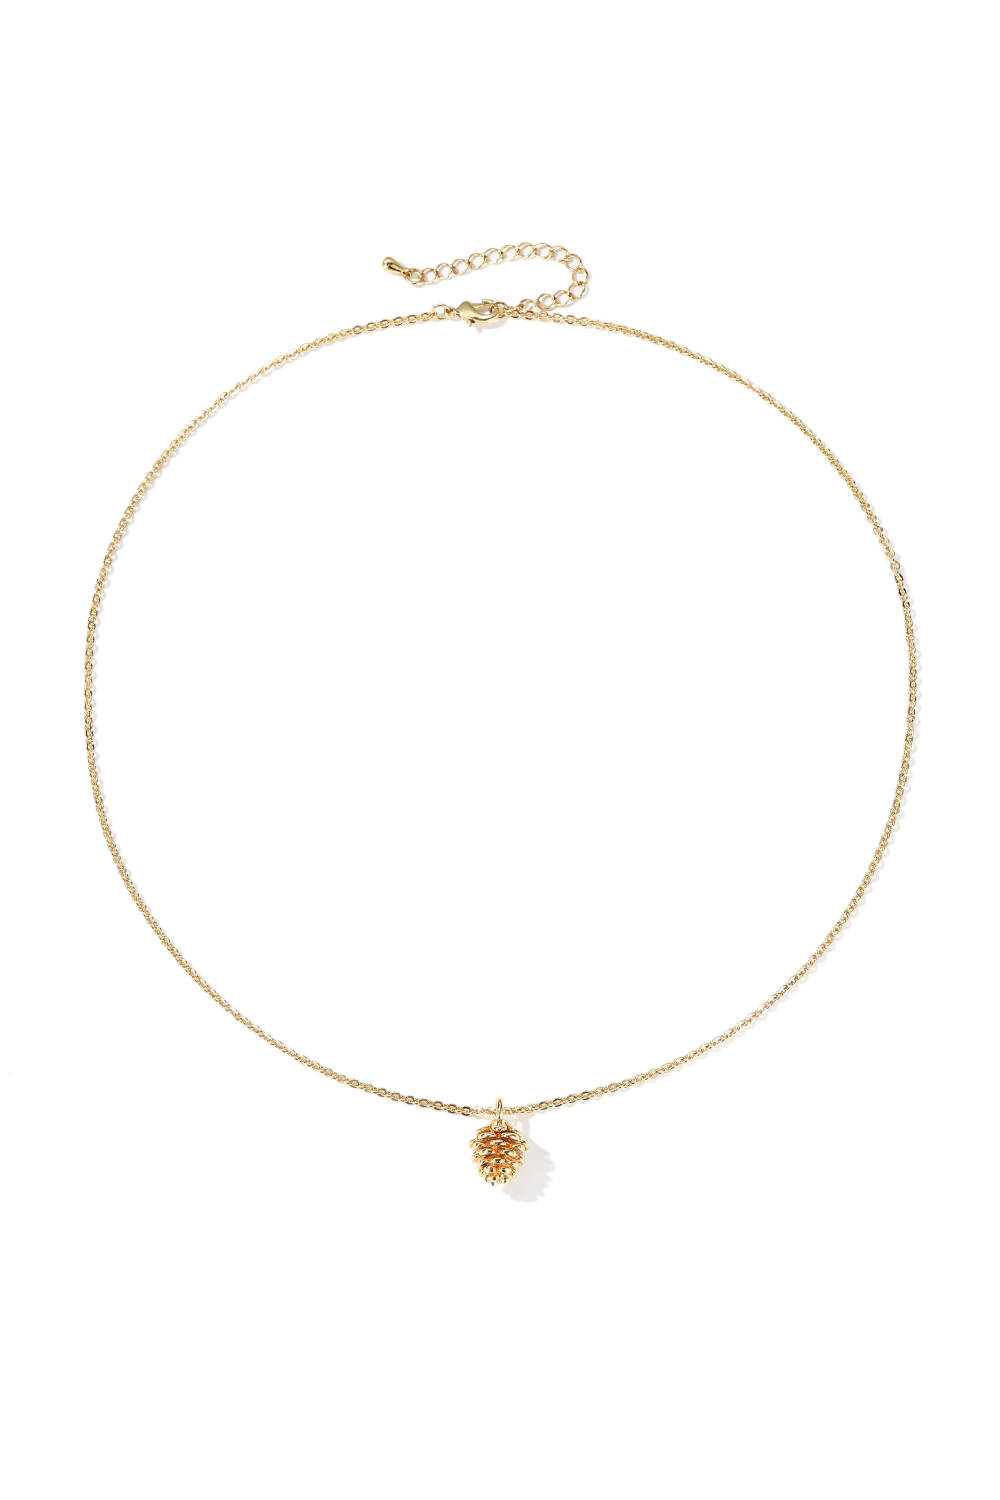 Classicharms-Pinecone Pendant Necklace